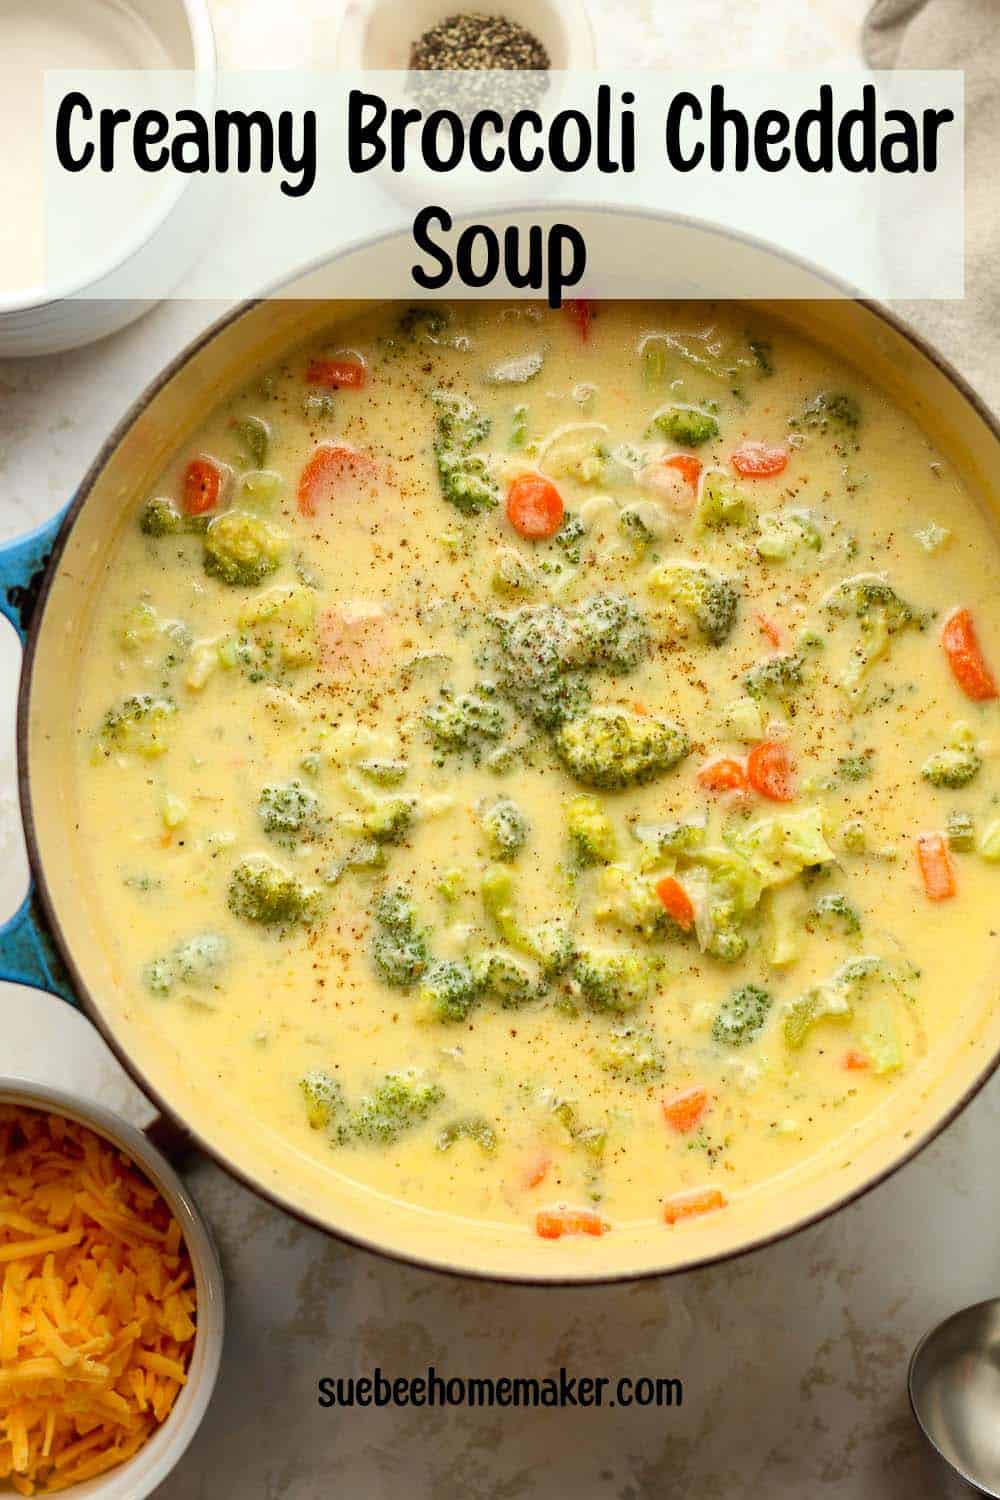 A stock pot of broccoli cheddar soup.